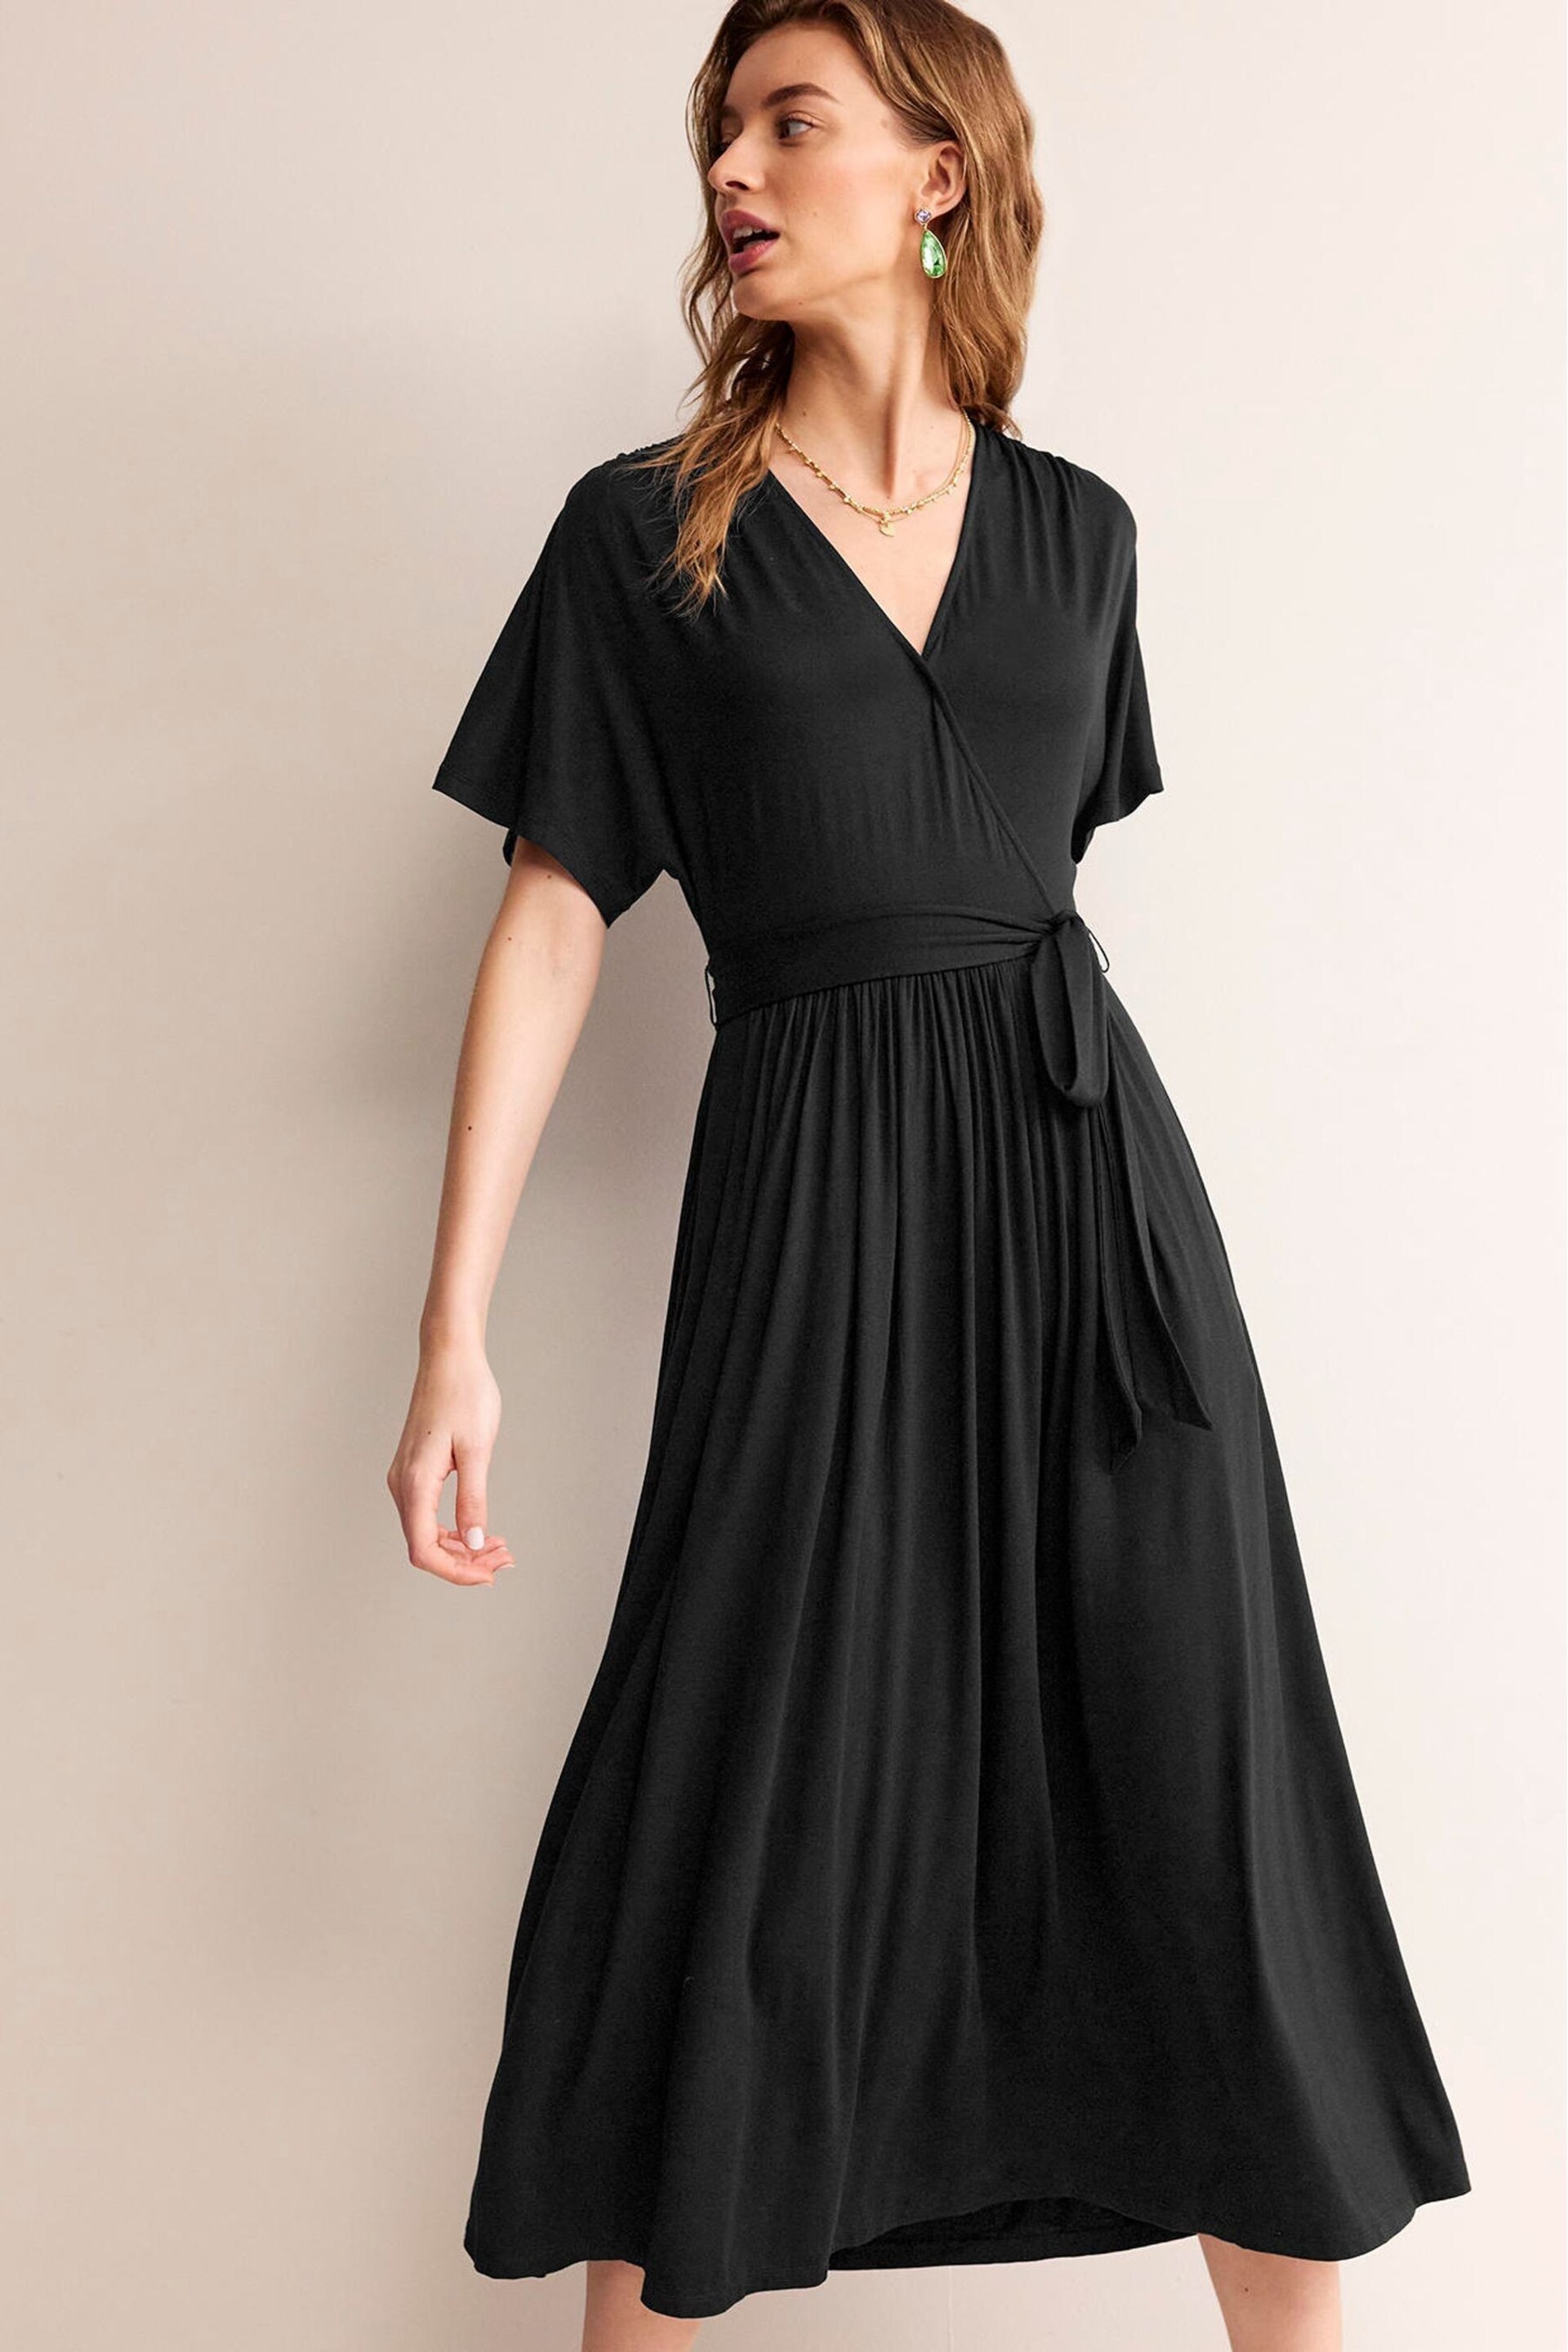 Boden Black Petite Kimono Wrap Jersey Midi Dress - Image 4 of 5